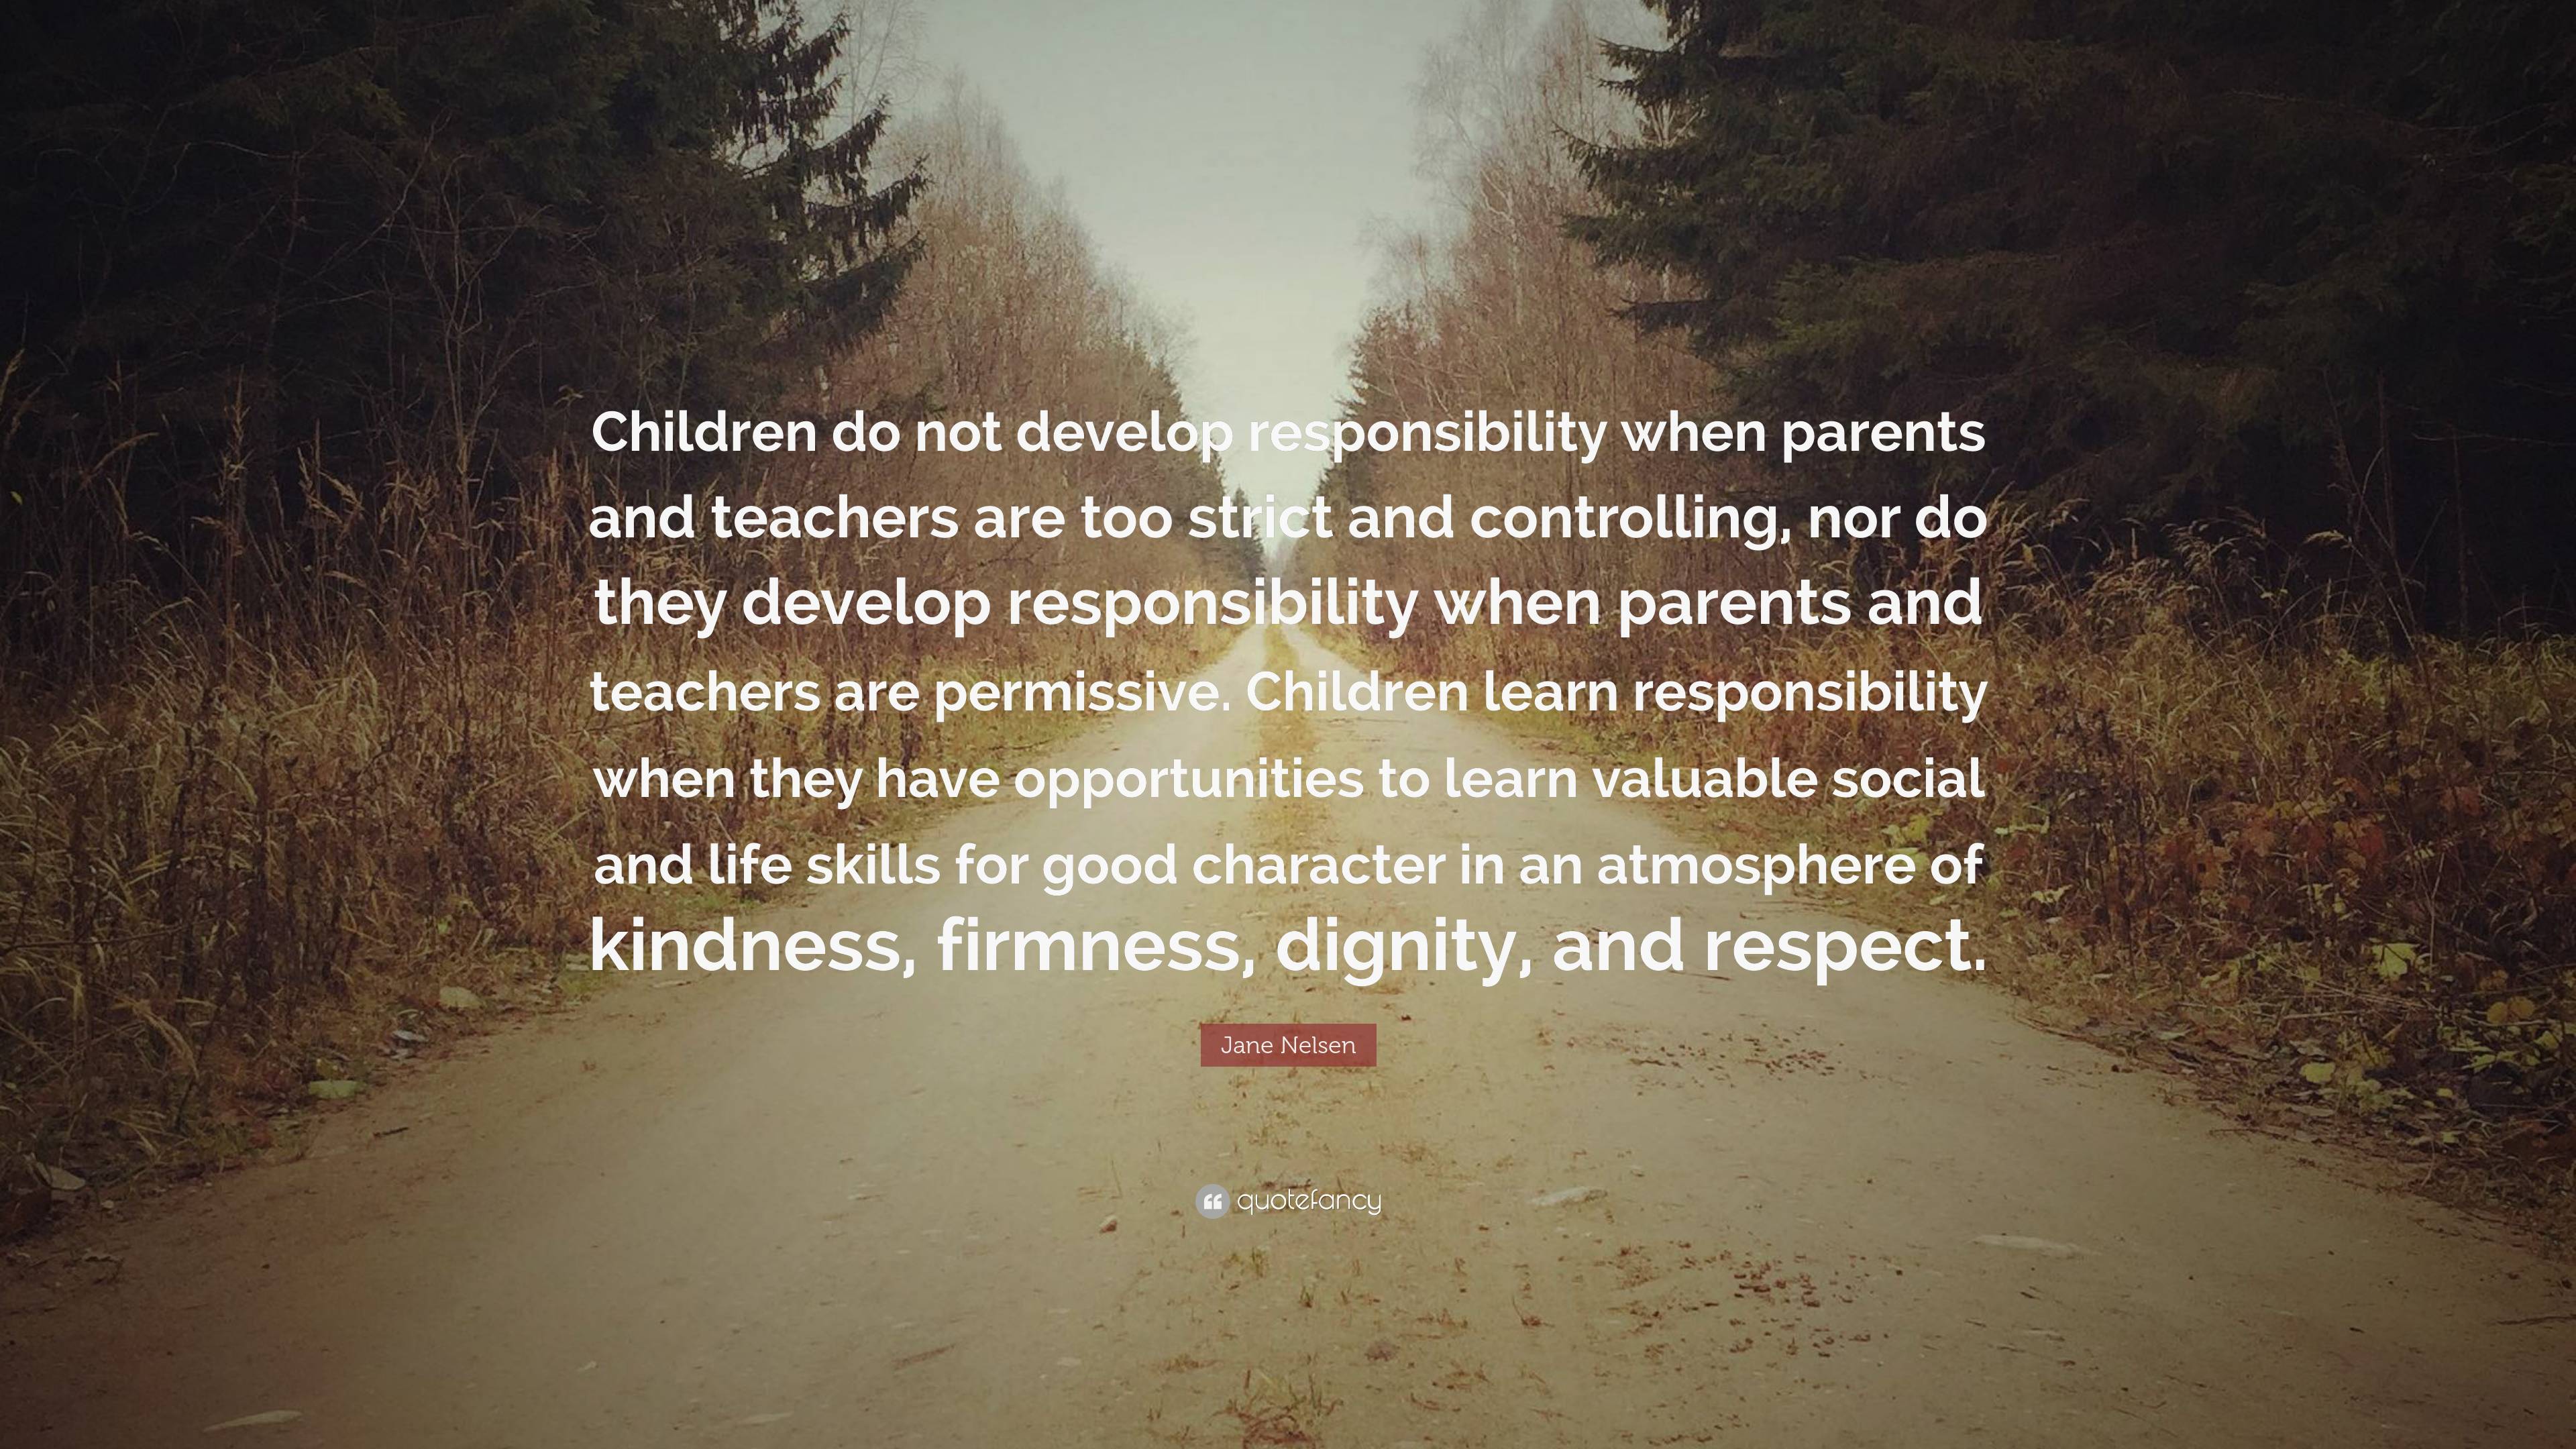 Jane Nelsen Quote: “Children do not develop responsibility when parents ...